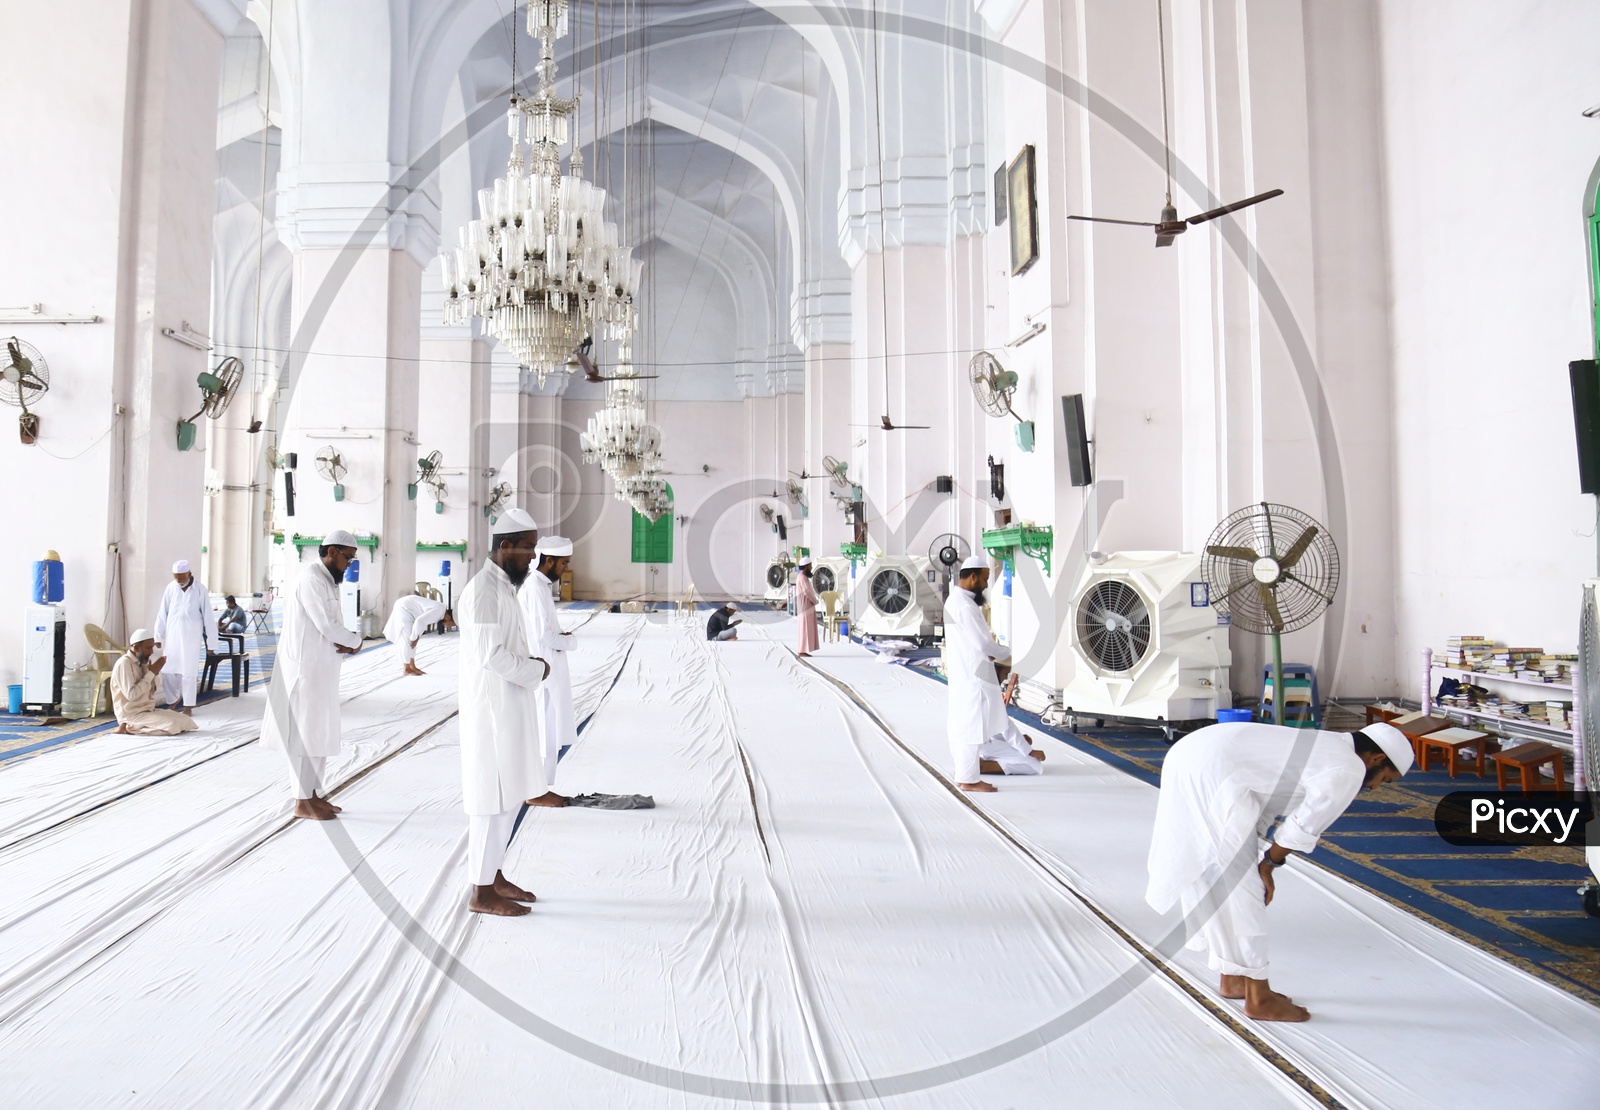 Muslims performing namaz prayer